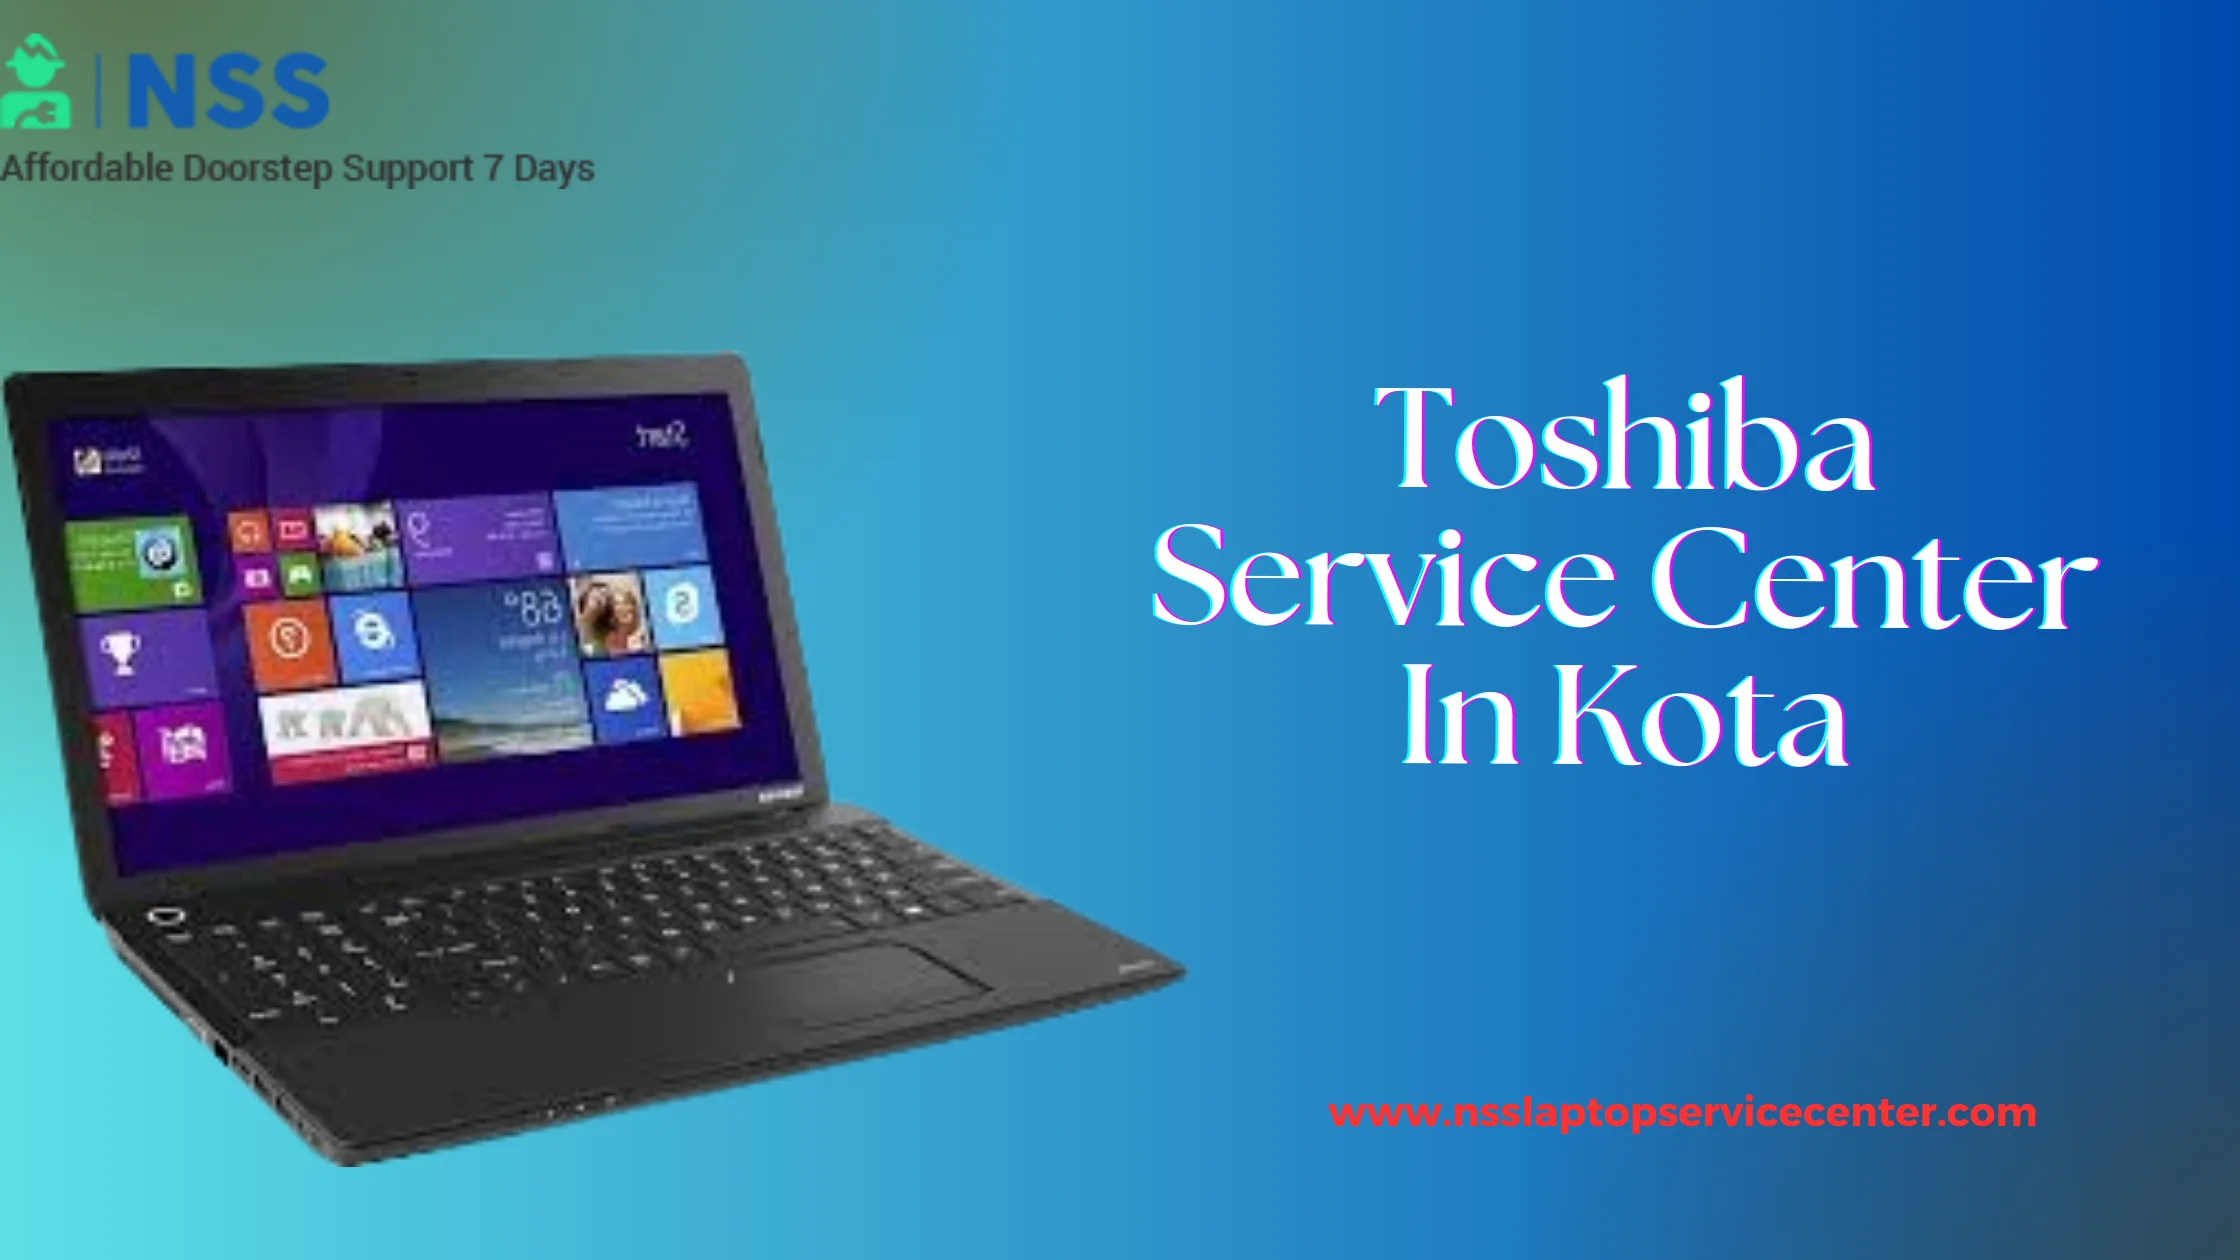 Toshiba Service Center In Kota Rajasthan